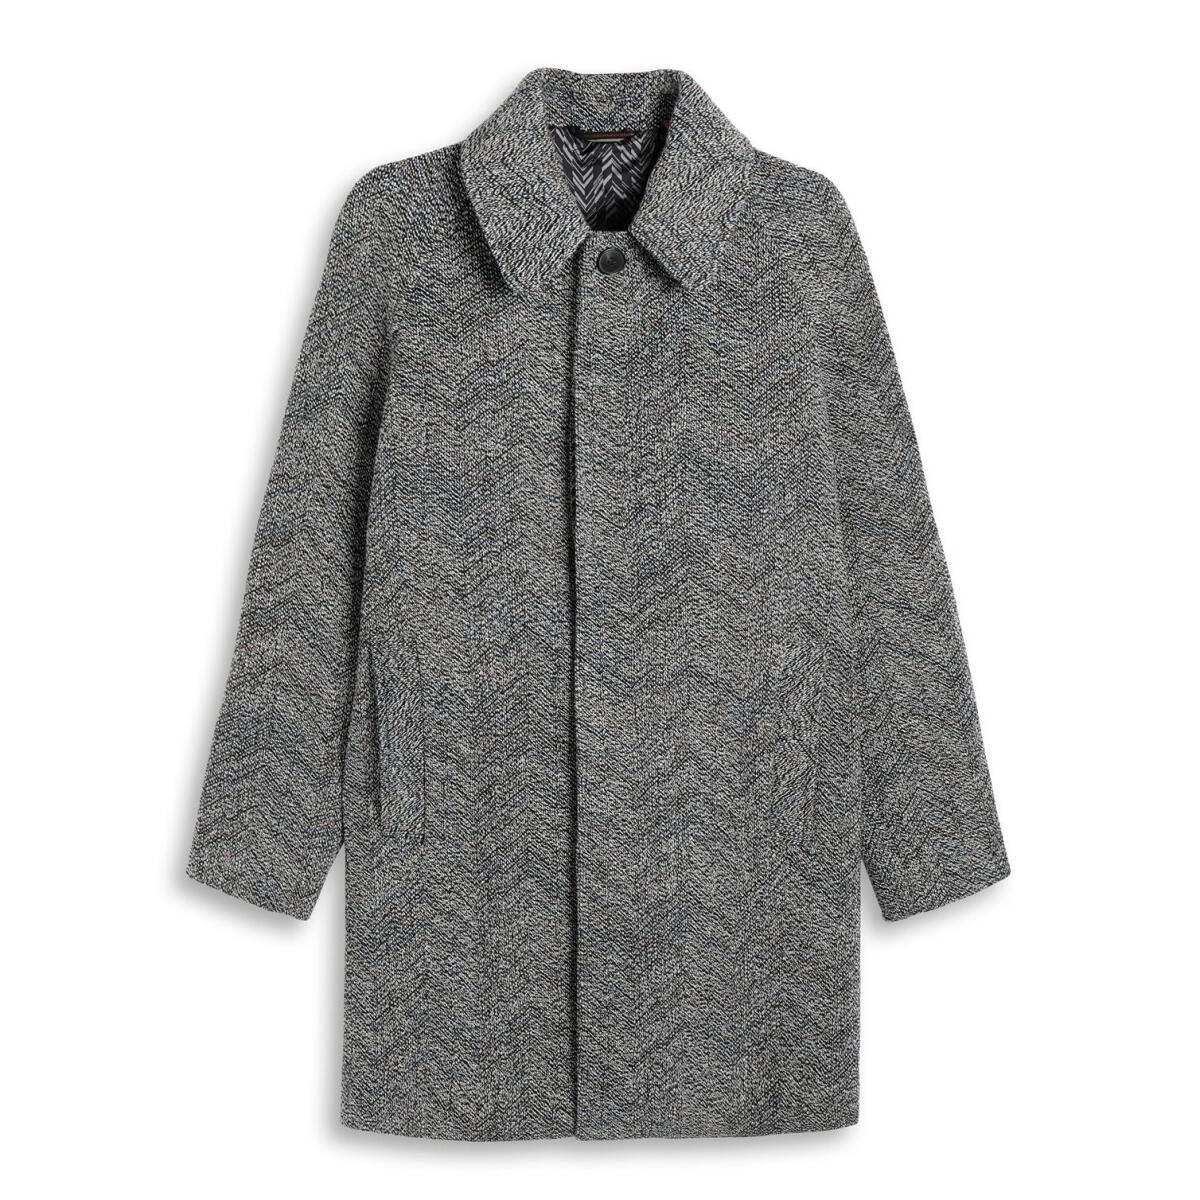 A Missoni tweed coat.